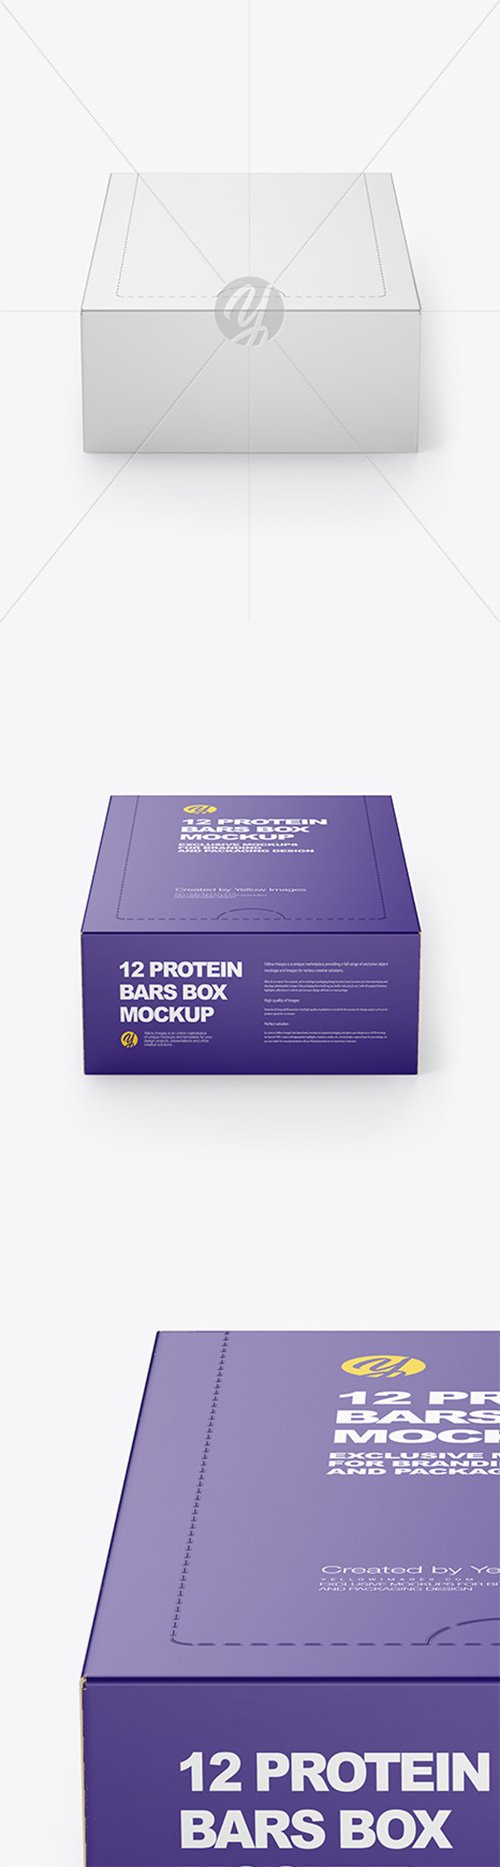 12 Protein Bars Box Mockup 55400 TIF